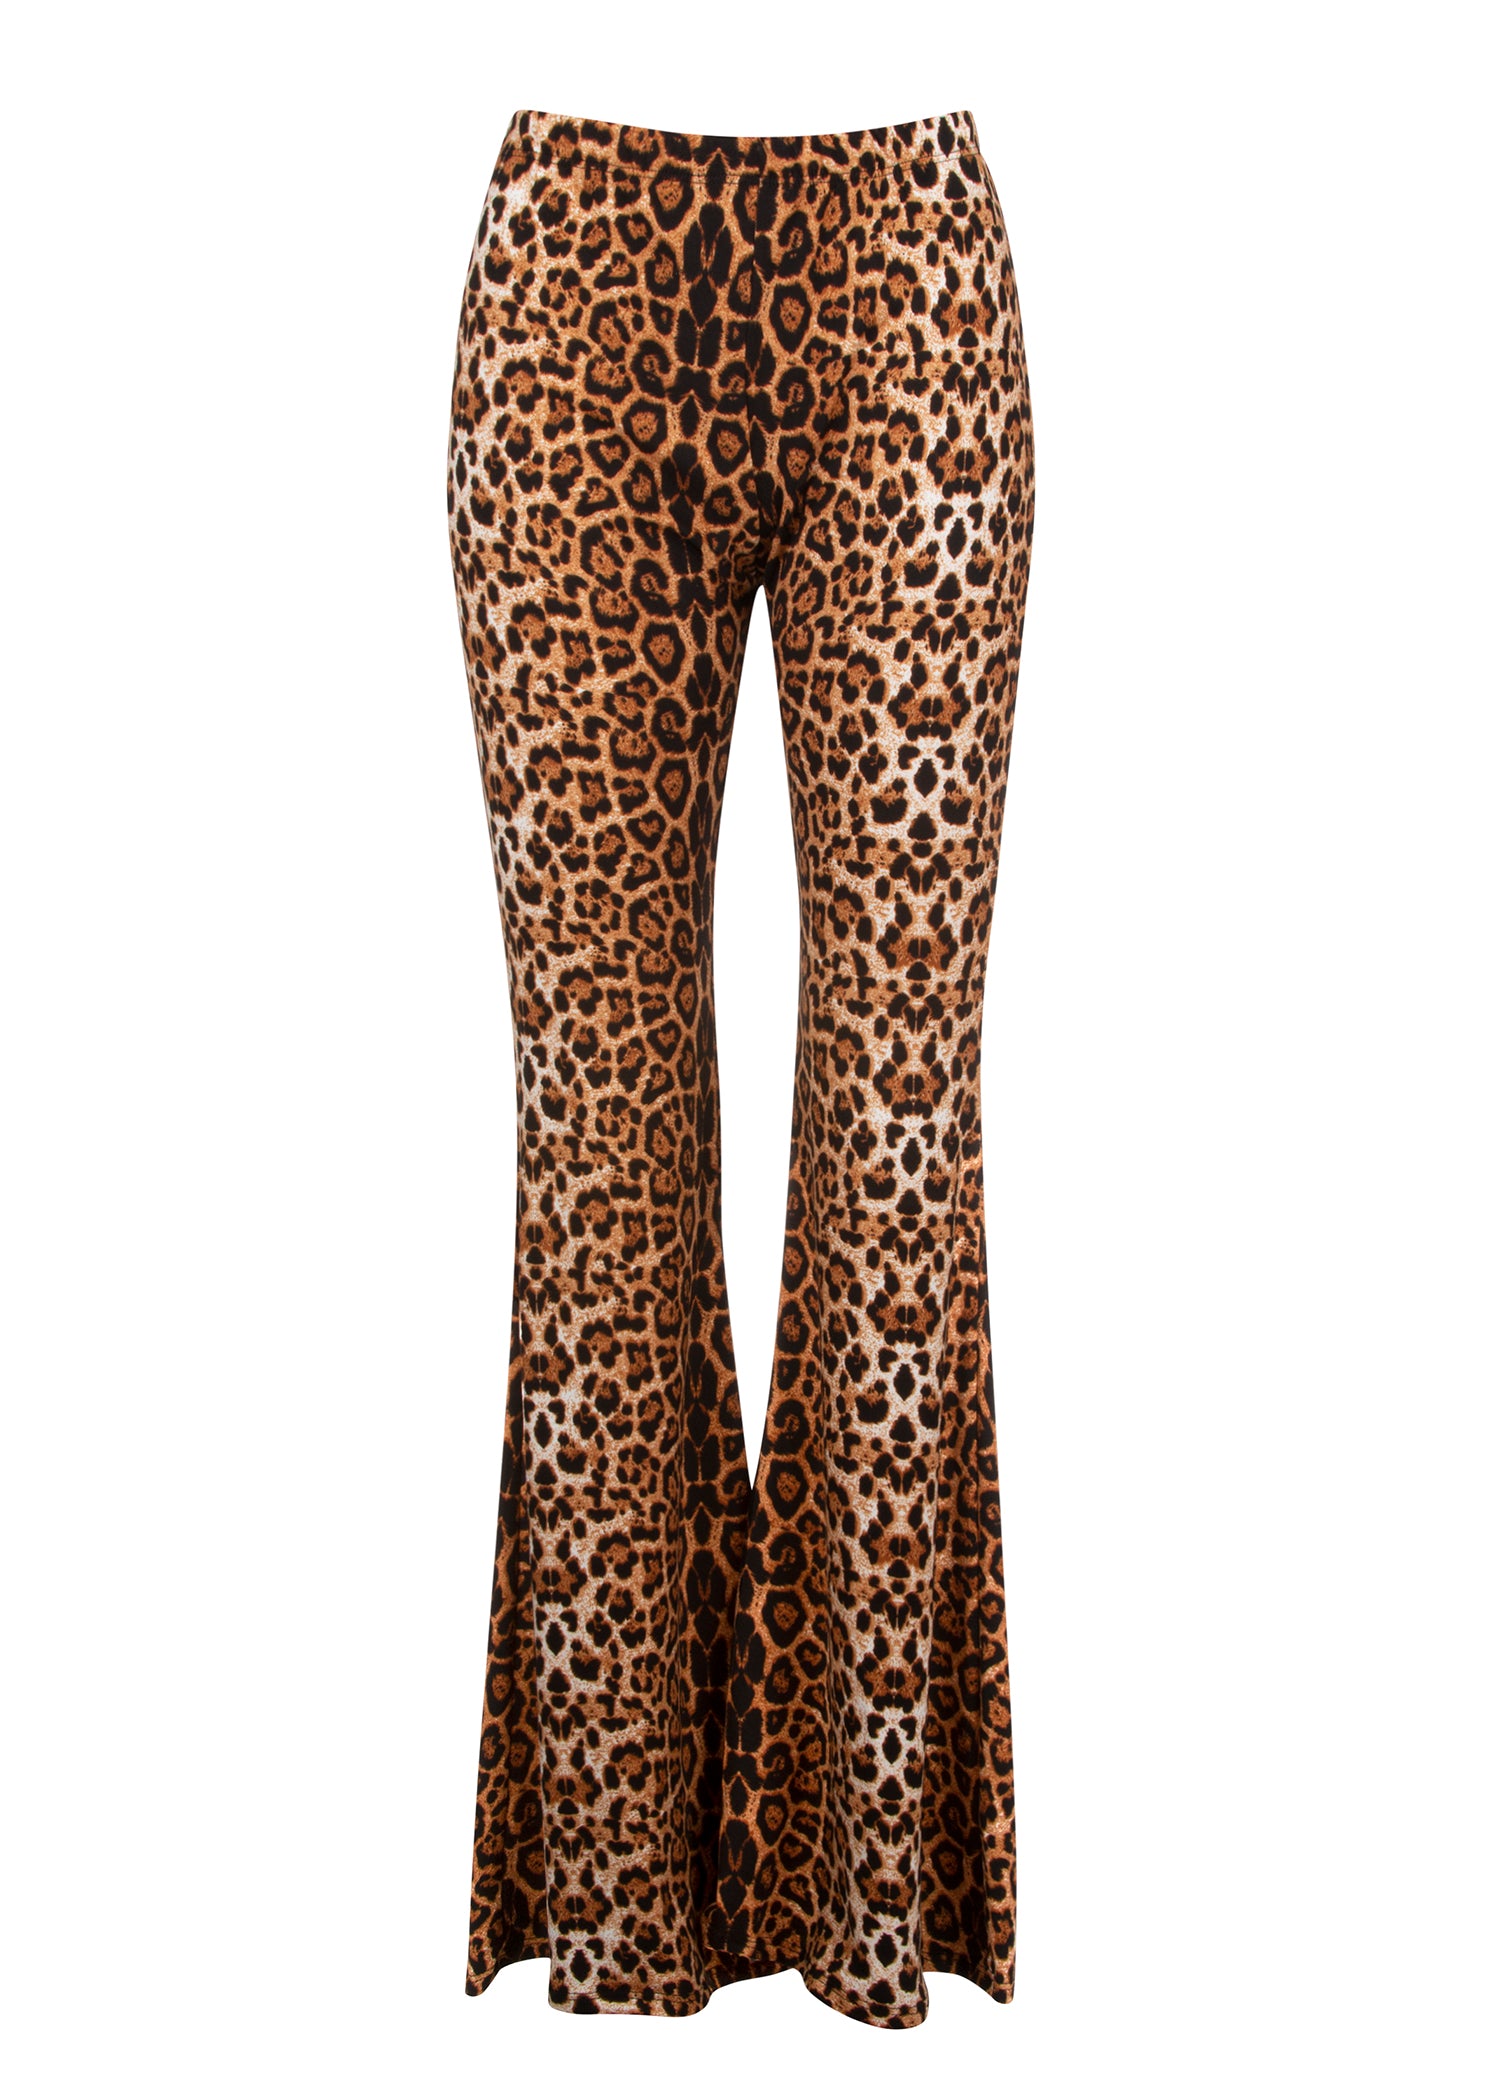 Leopard Print Flare Pants | Cheetah Bell Bottoms | Pretty Attitude